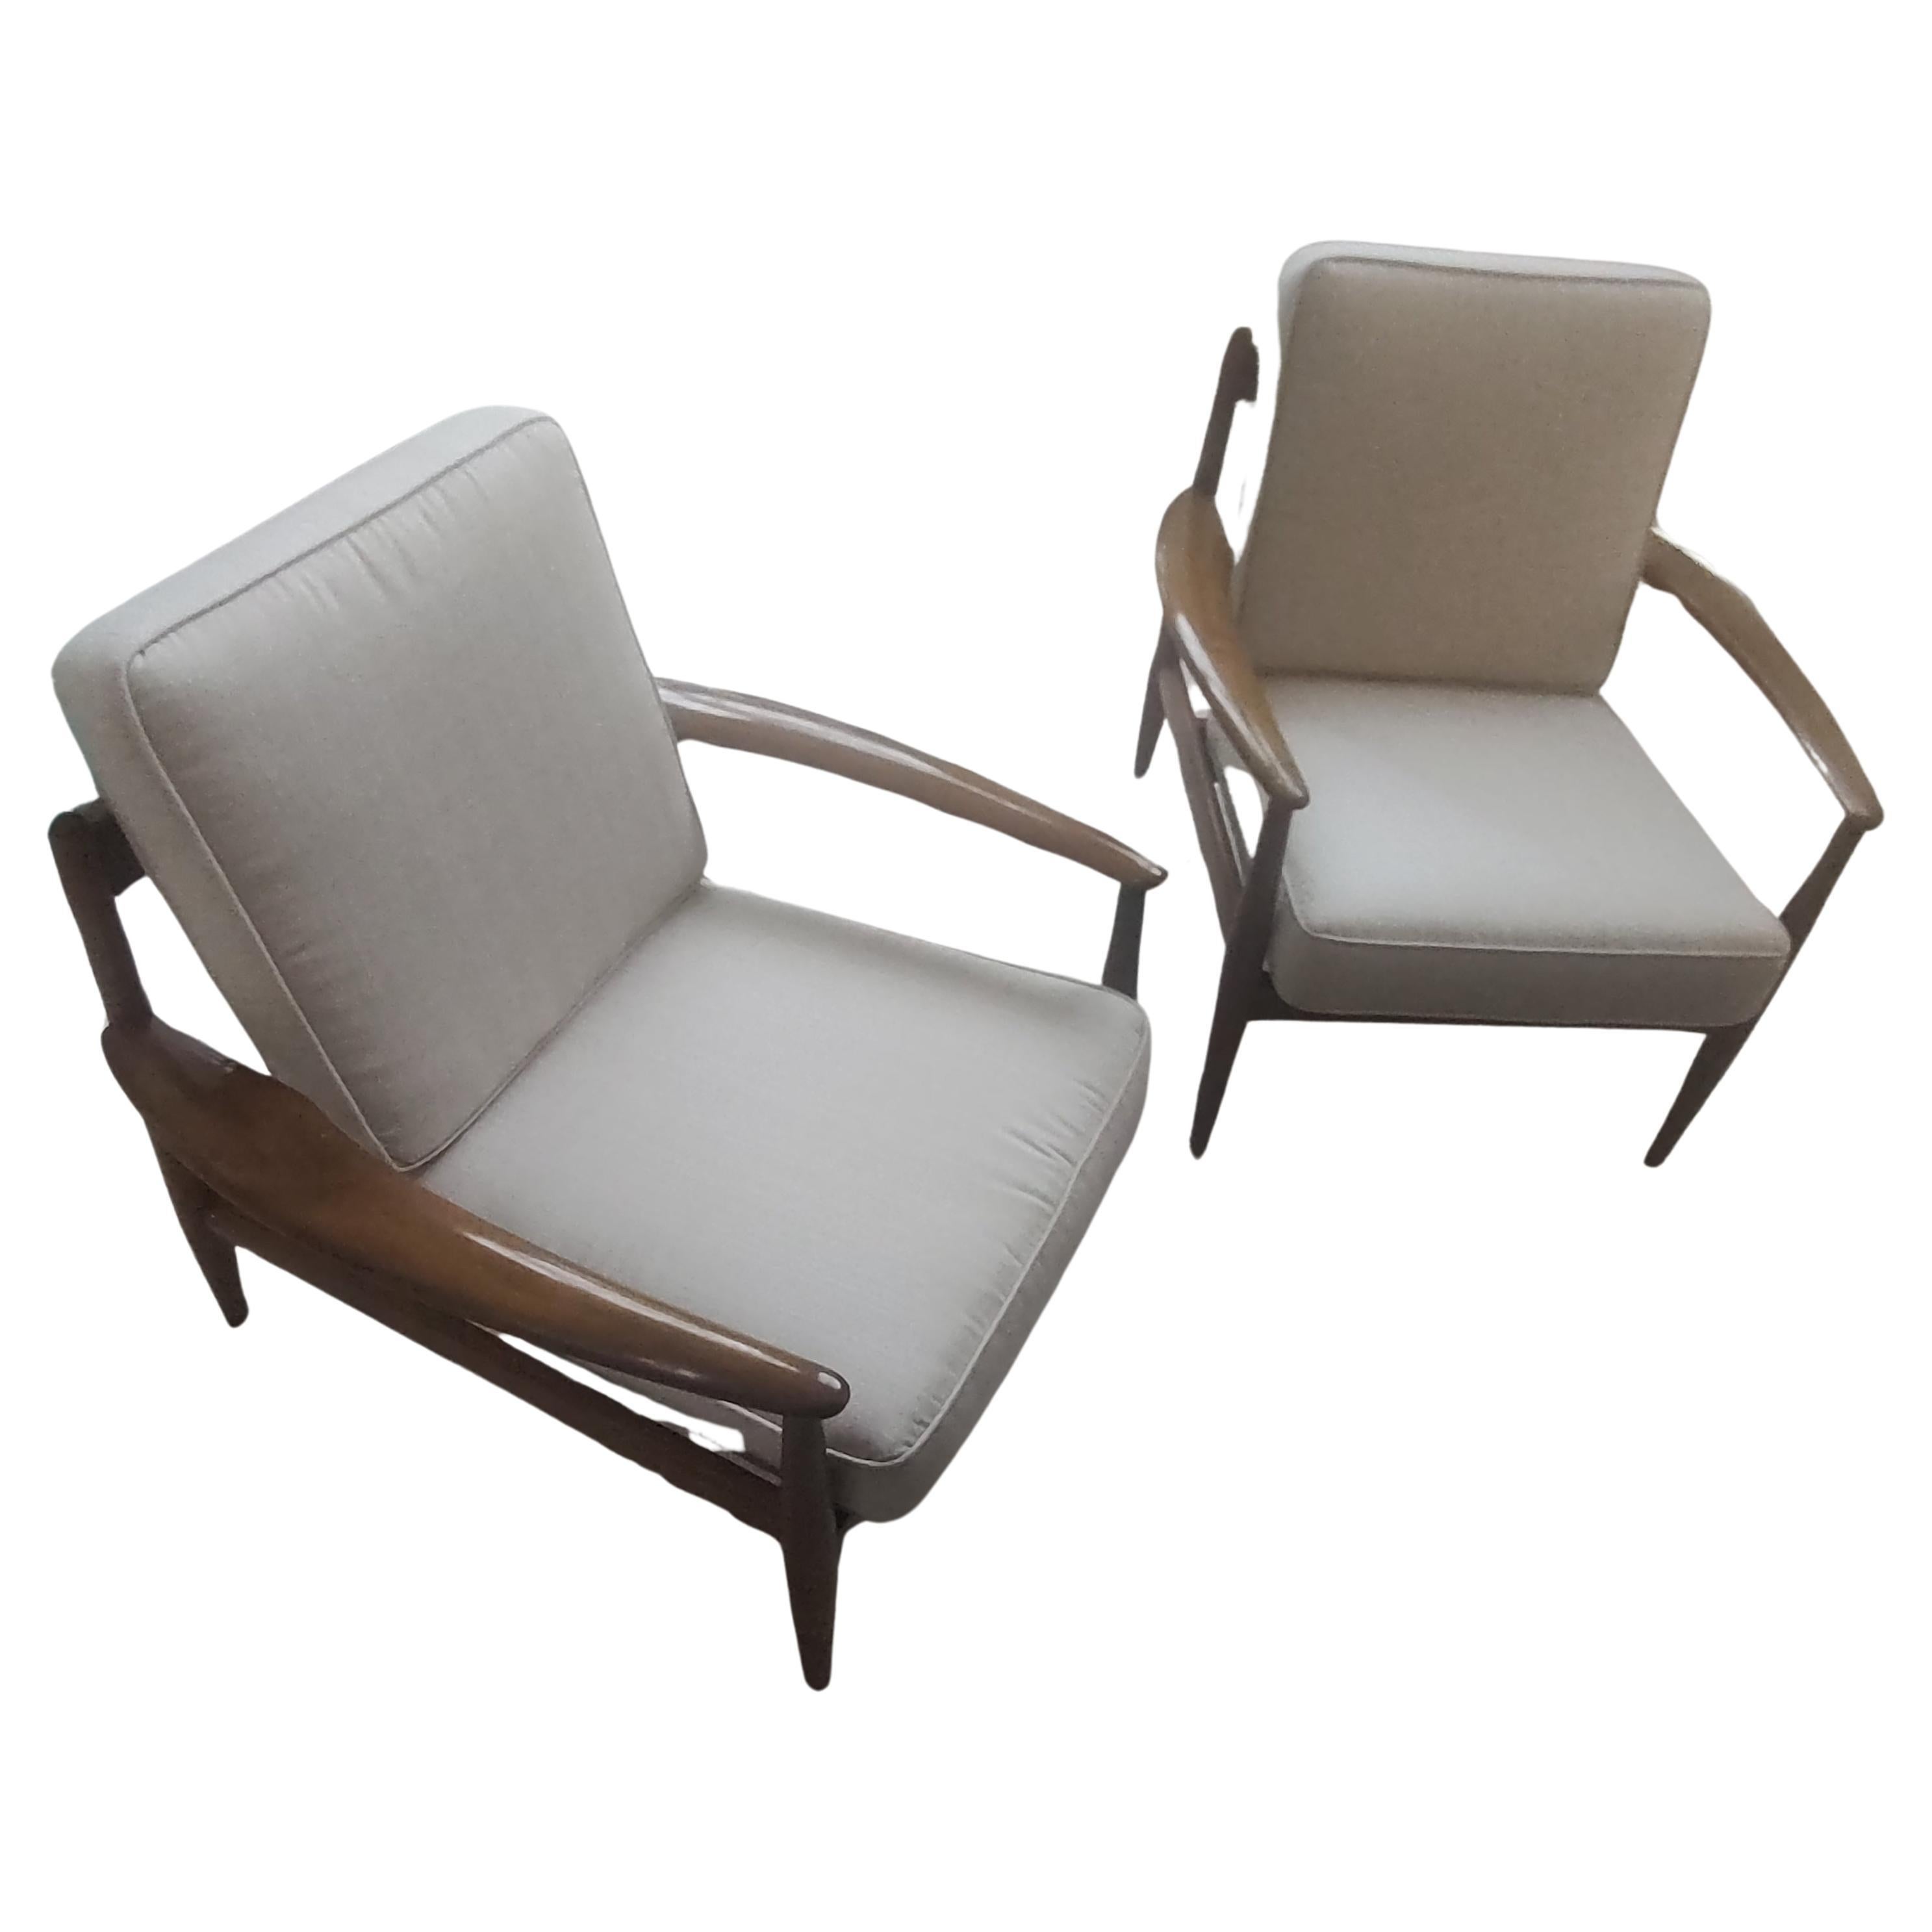 Pair Mid Century Danish Modern Beech Lounge Chairs by Grete Jalk - John Stuart  For Sale